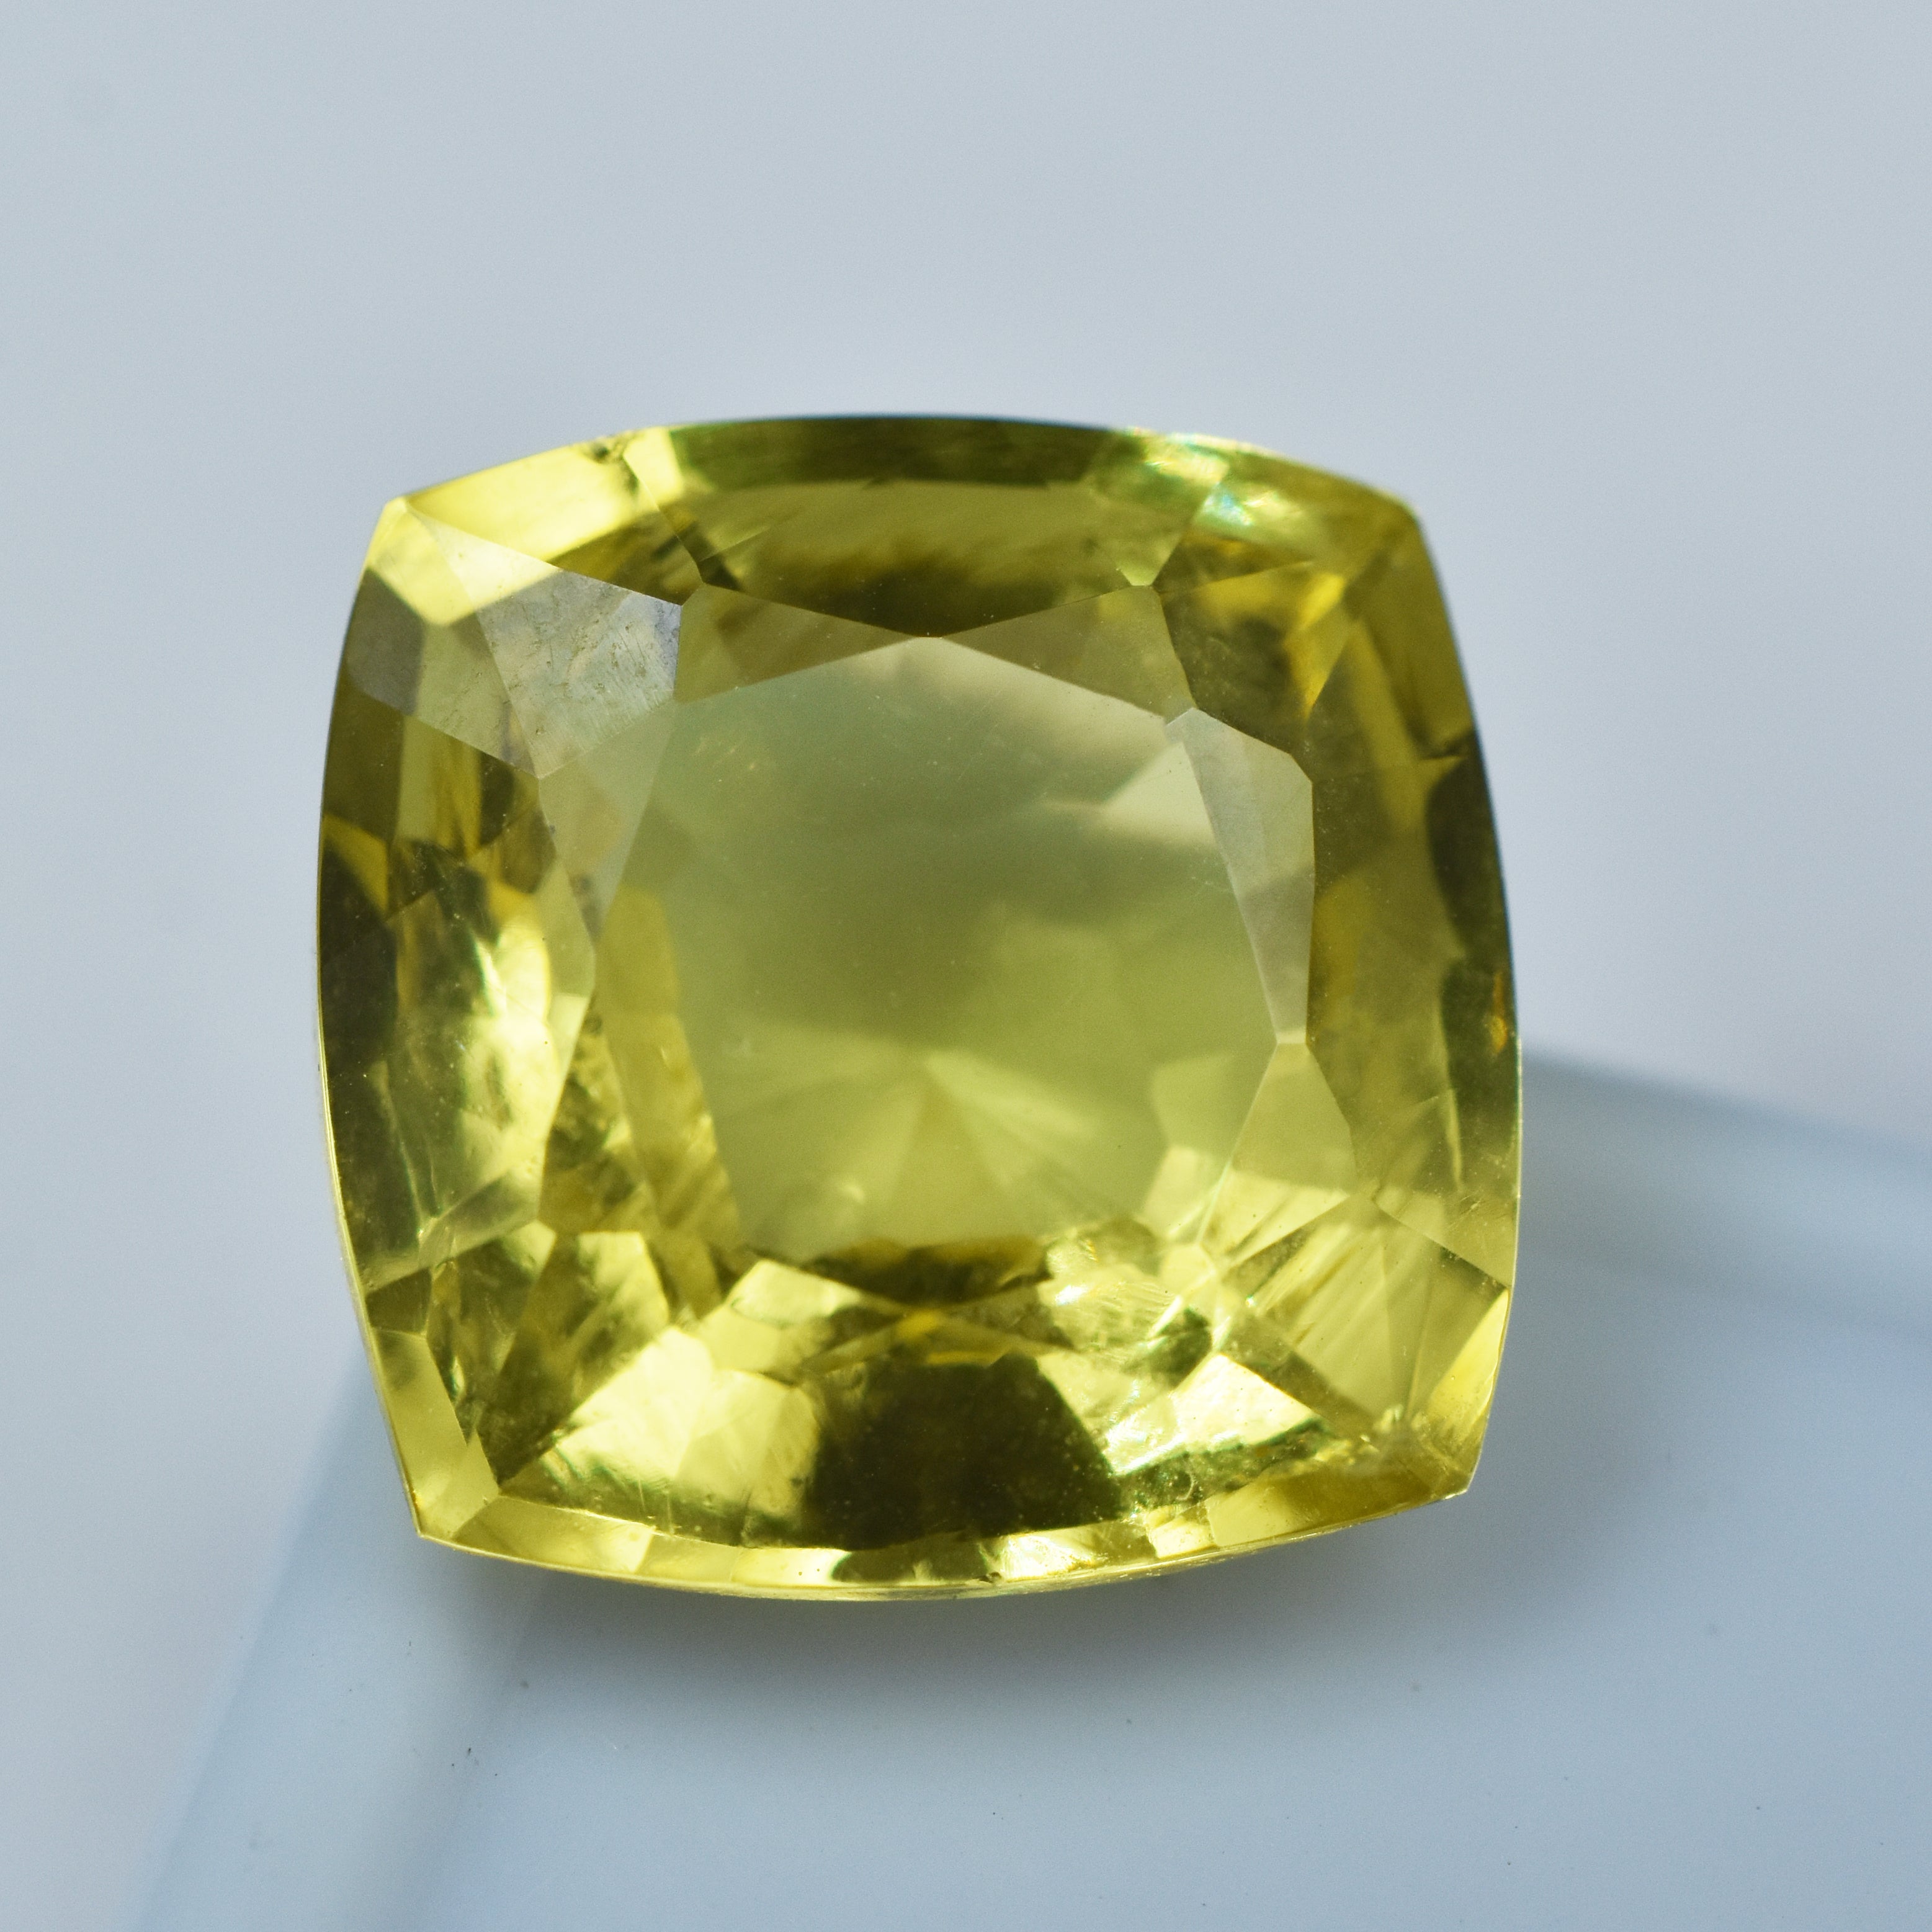 Sri Lanka Sapphire Yellow Square Cushion Cut 10.10 Carat Certified Natural Loose Gemstone Best For Healing Properties